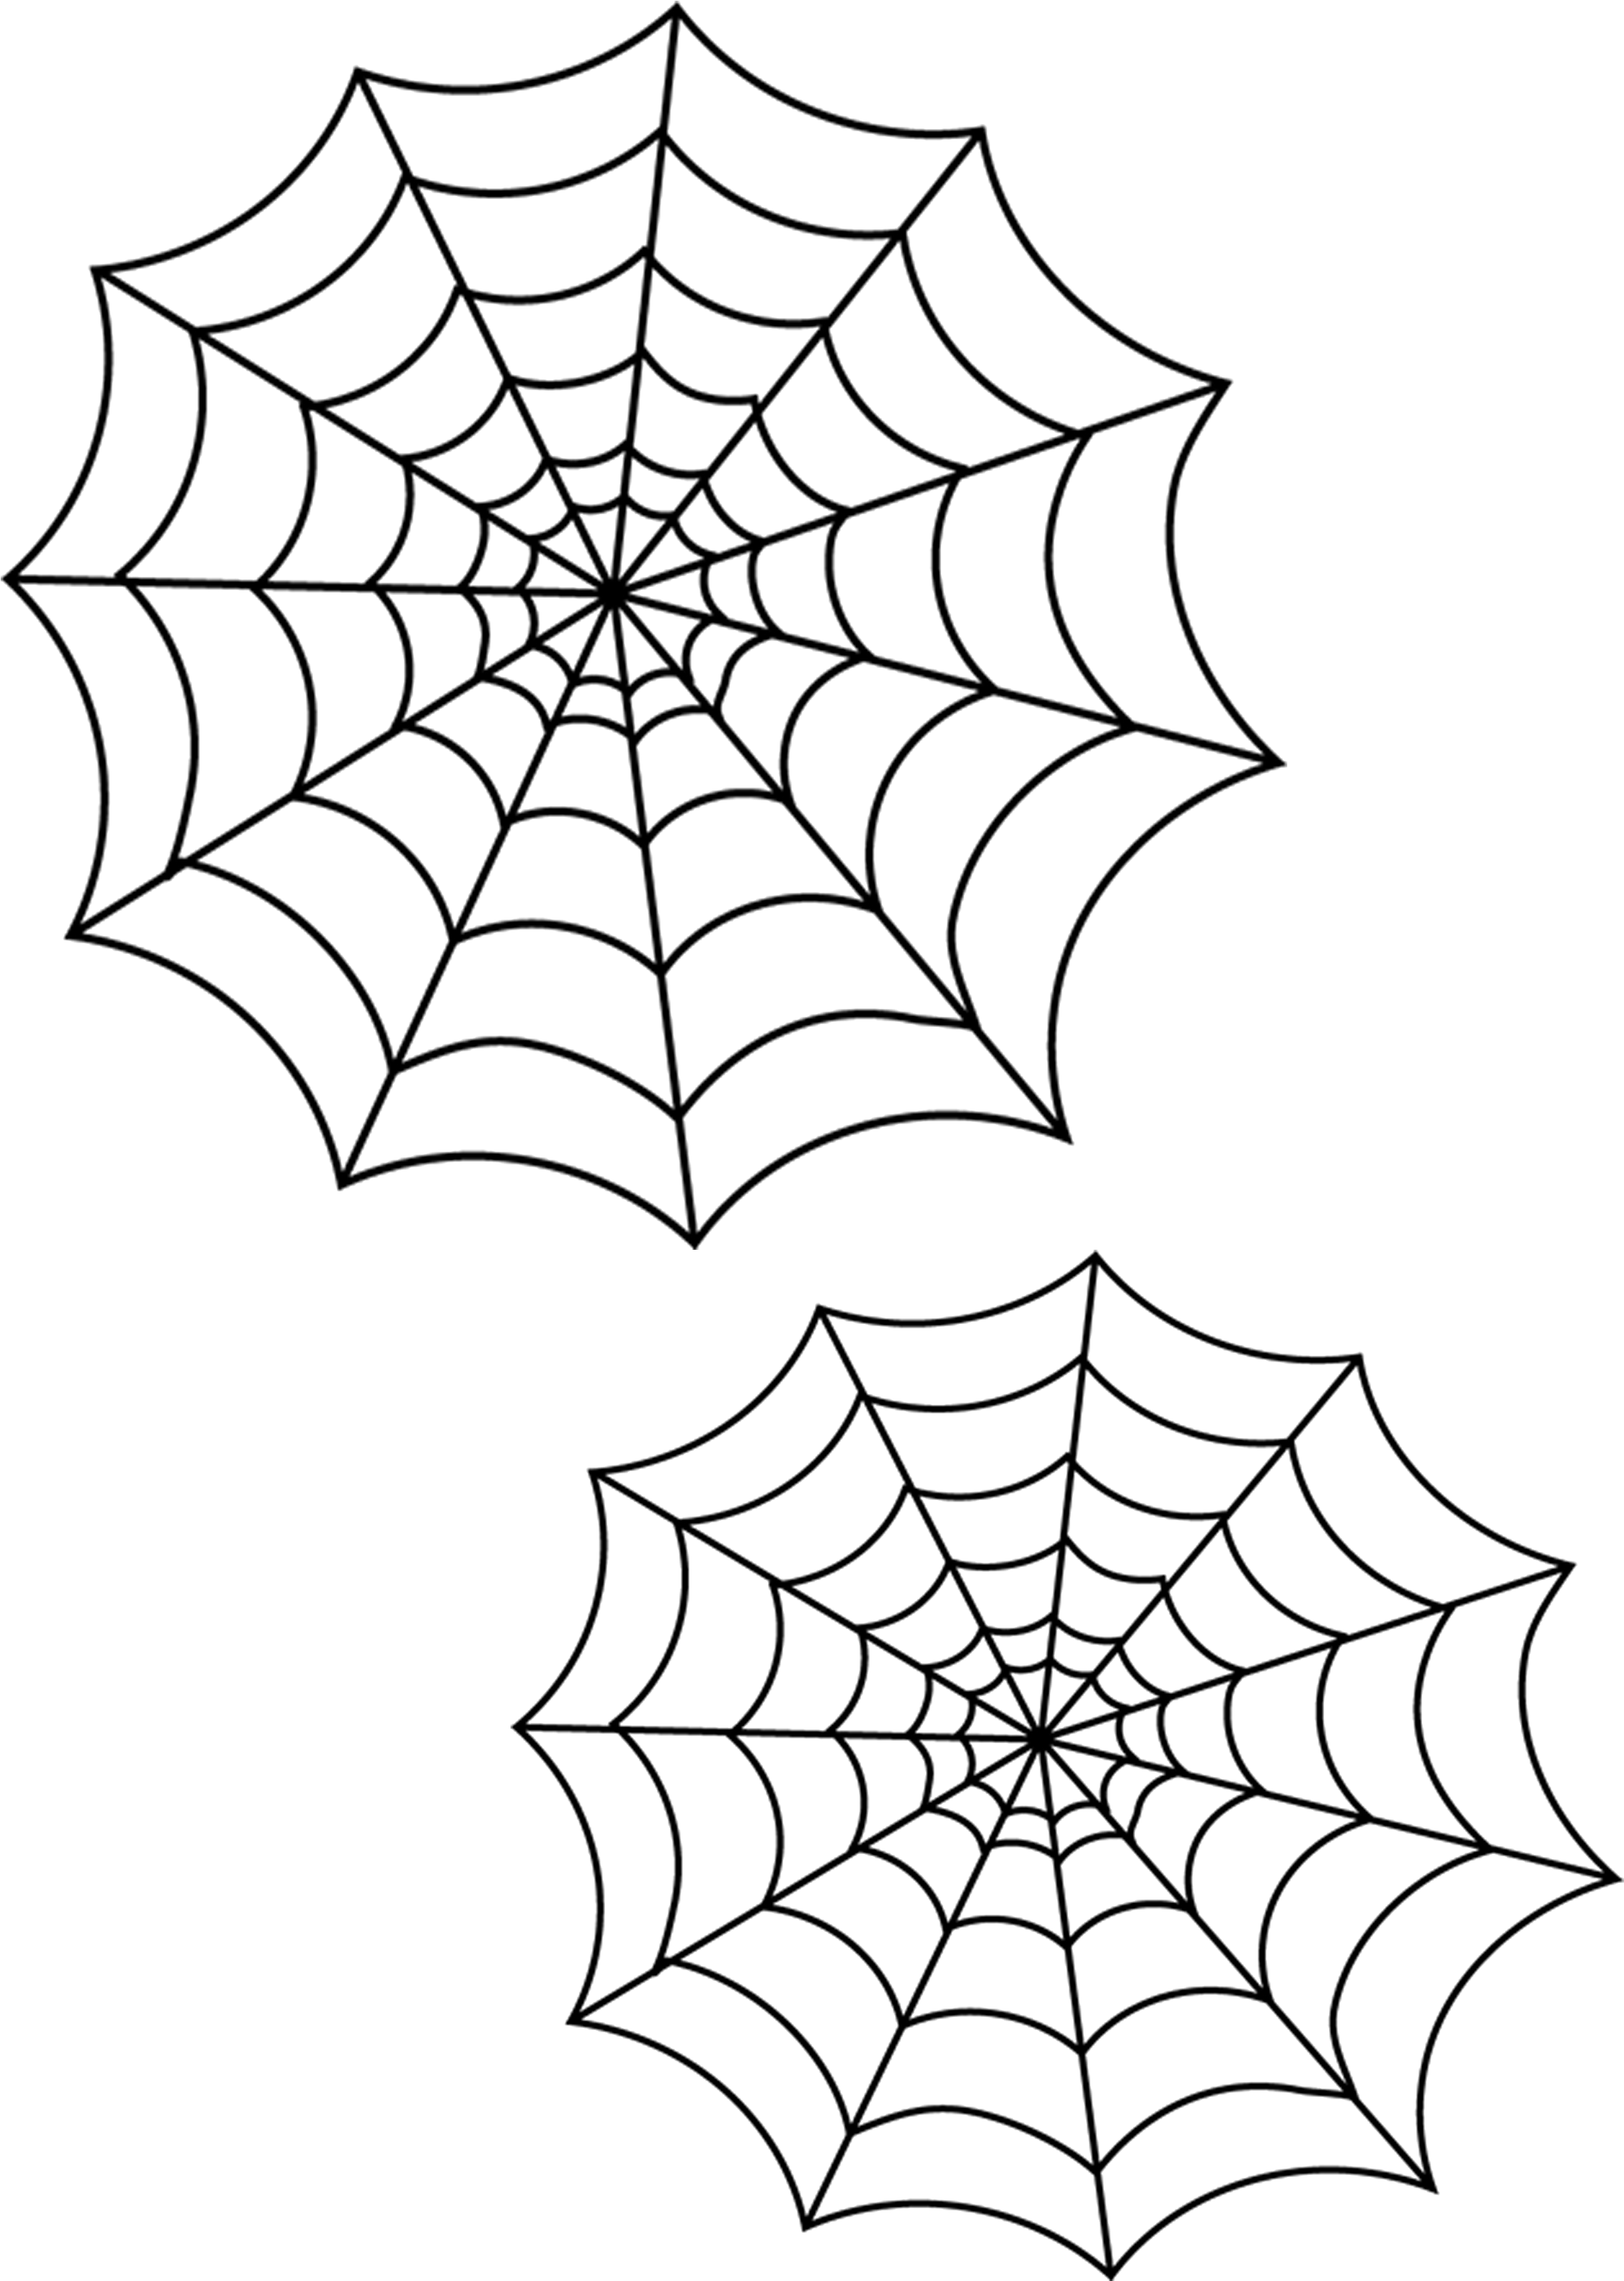 Spider Web Duo Graphic